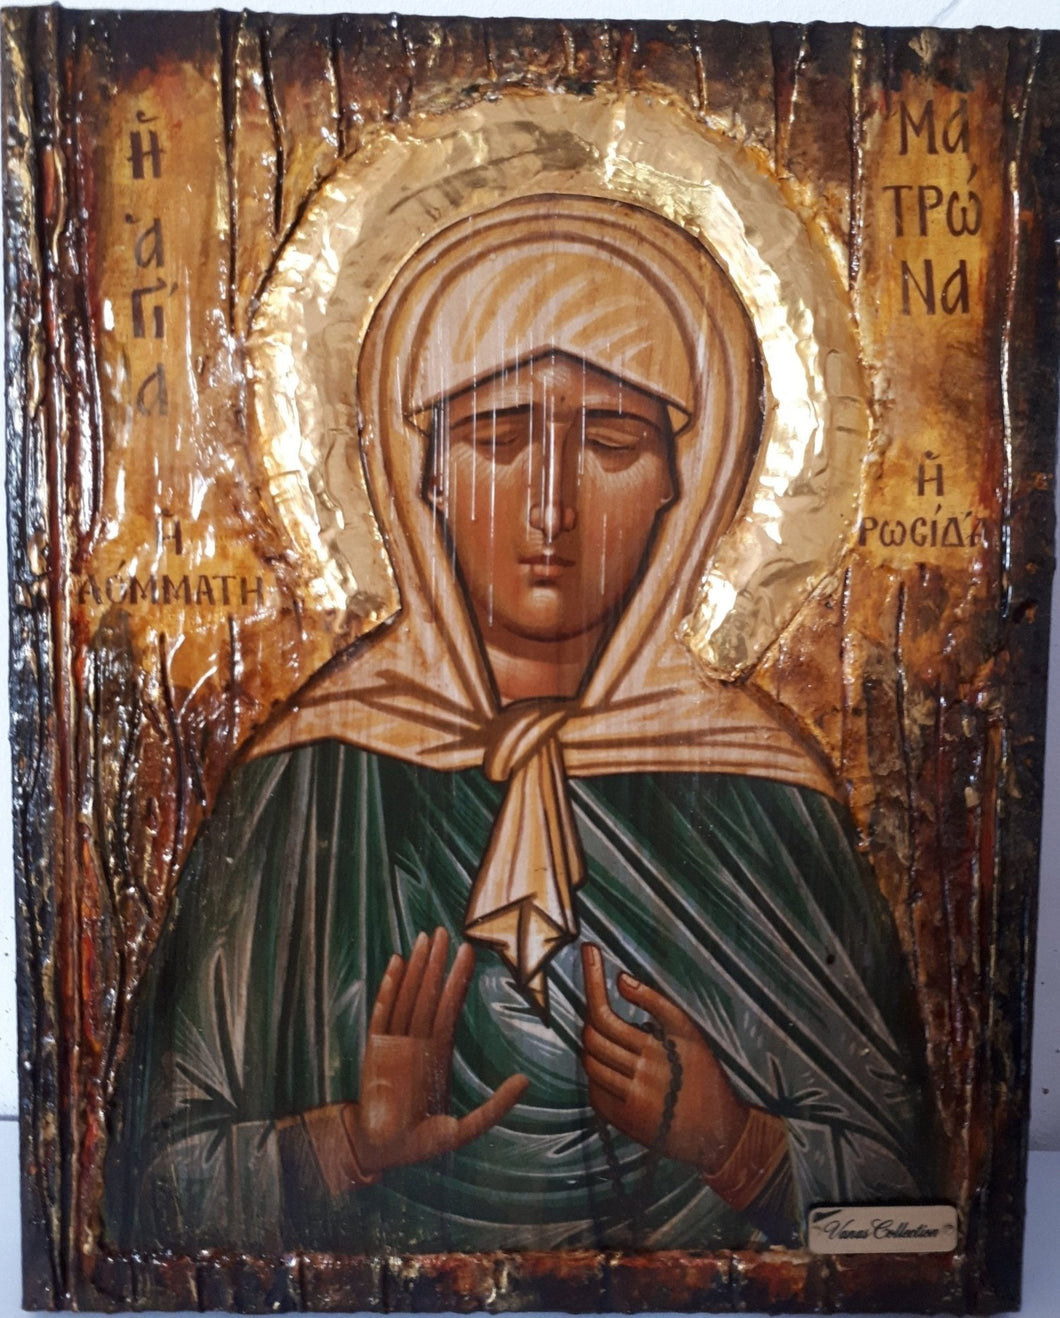 Saint St Matrona of Moscow Russian Orthodox Icon - Greek Handmade Icons - Vanas Collection